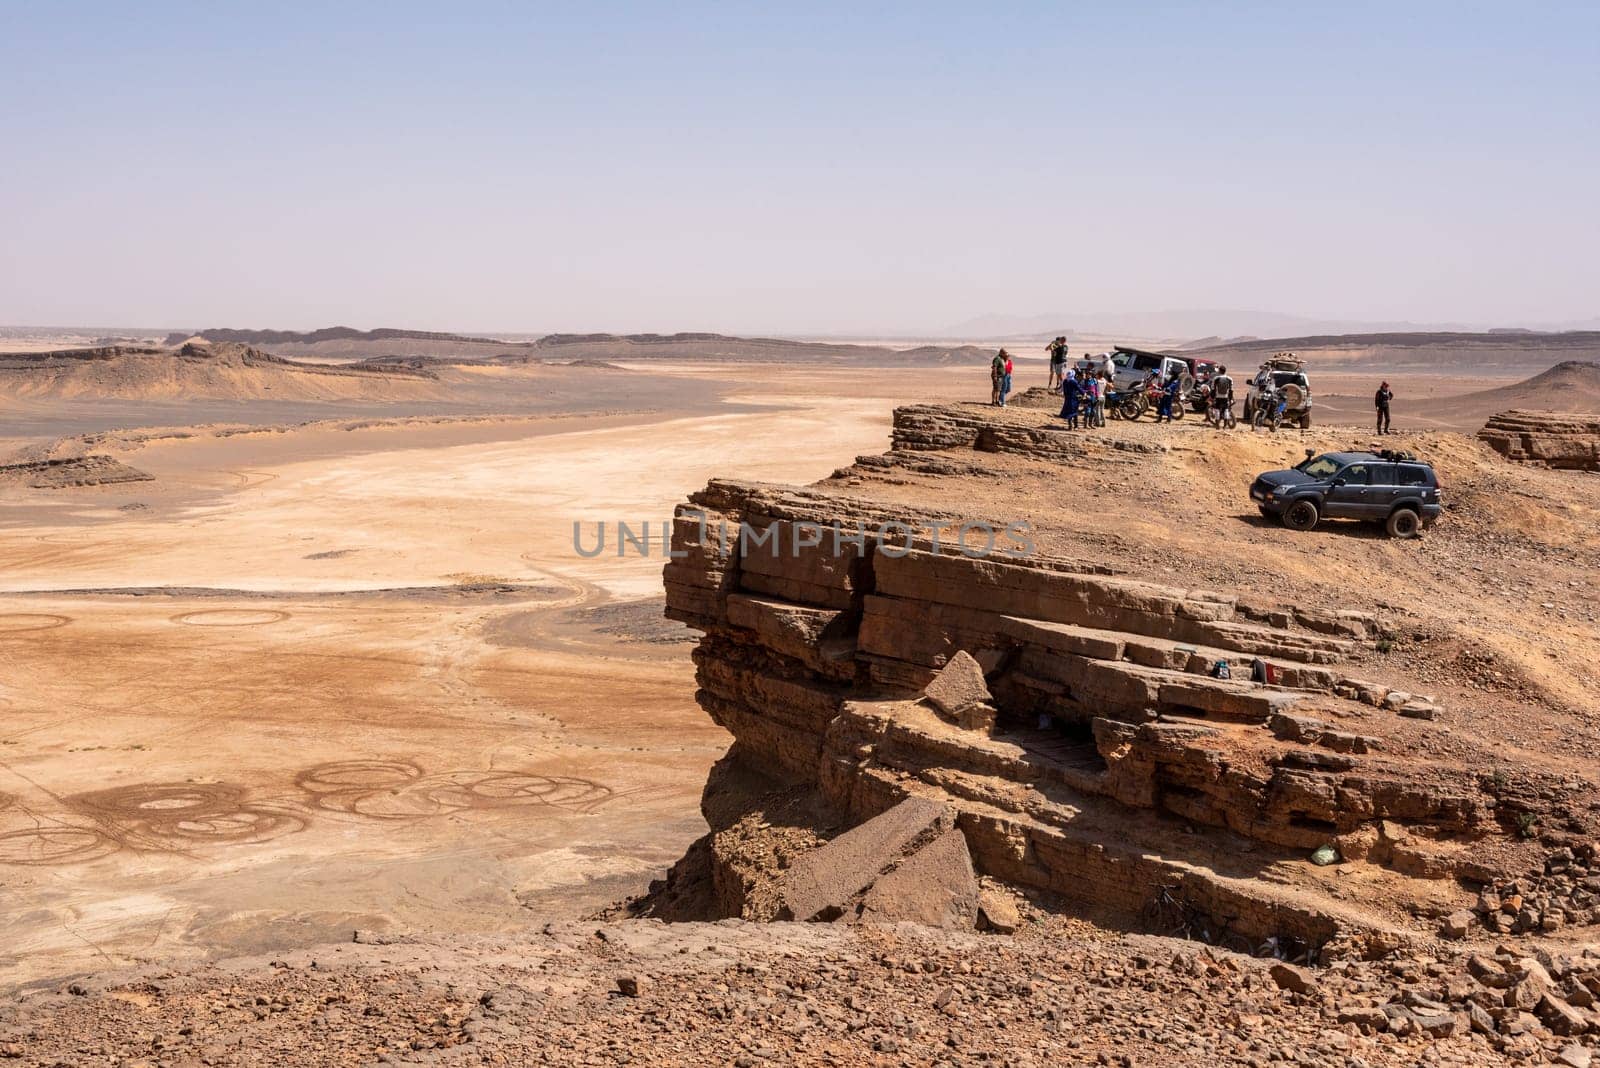 Tourists enjoying the scenic view of the Sahara desert from mount Gara Medouar, Morocco